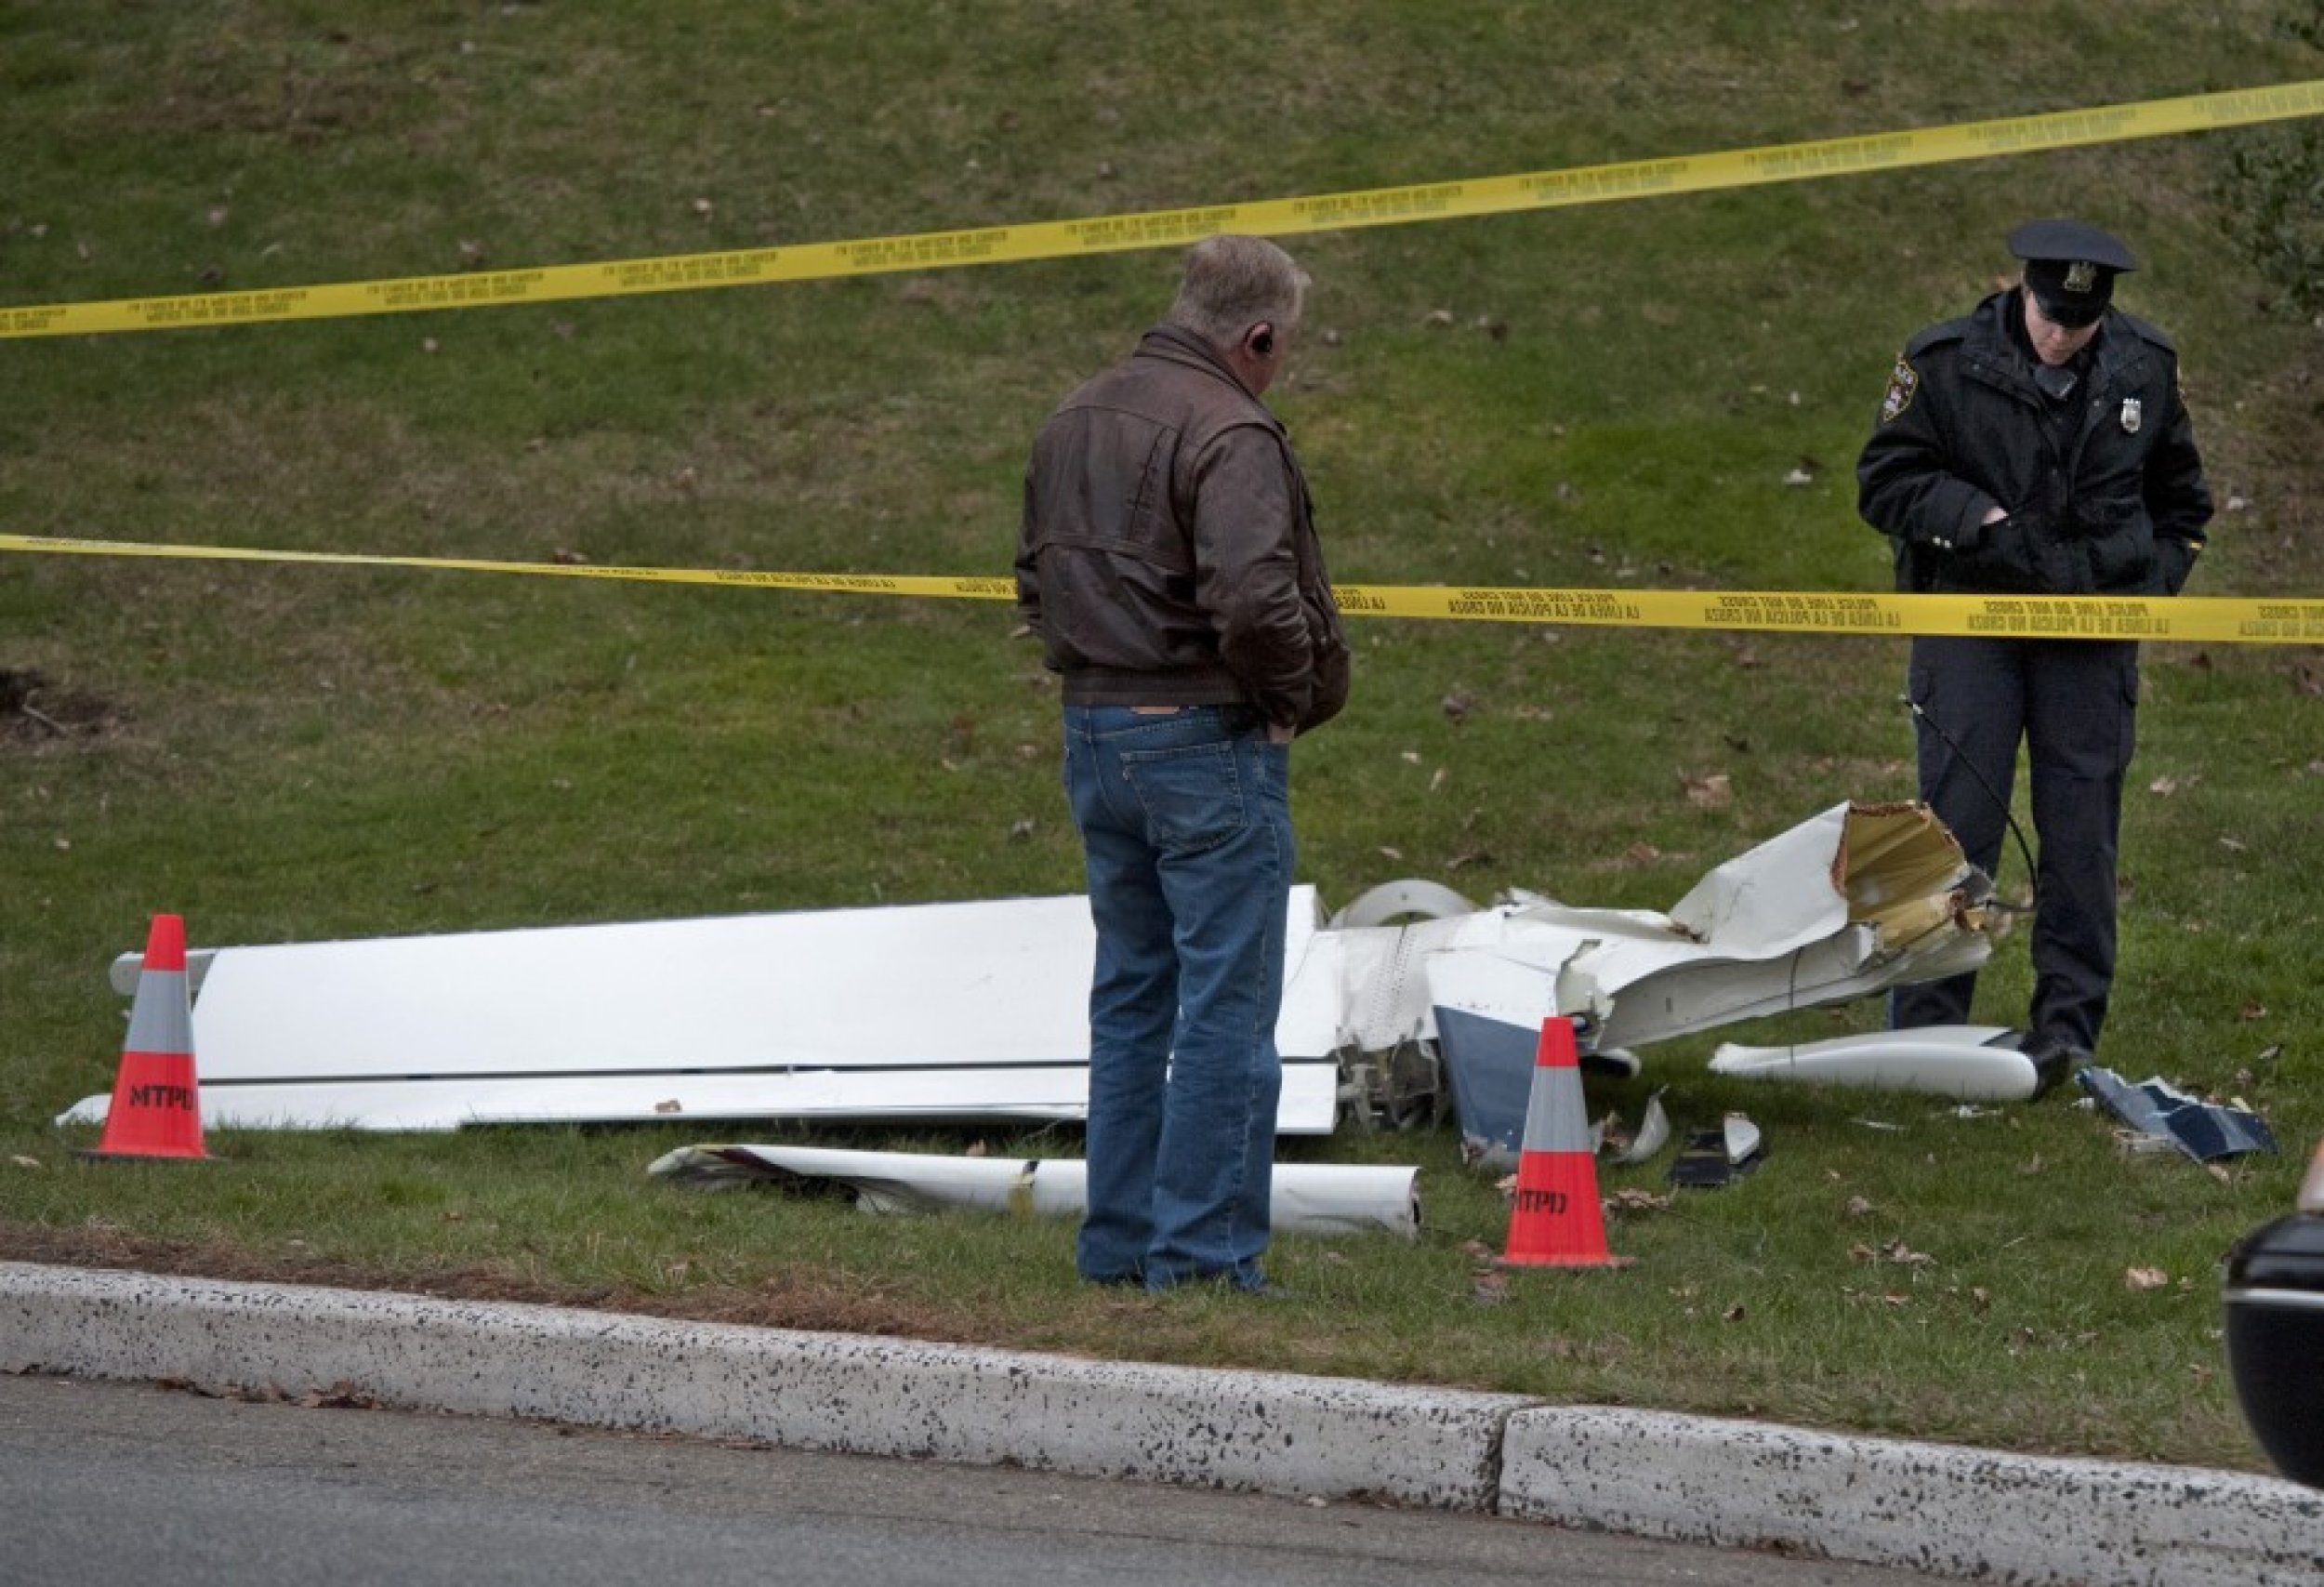 Plane Crash on New Jersey I287 Wreckage Spans Half a Mile [PHOTOS]